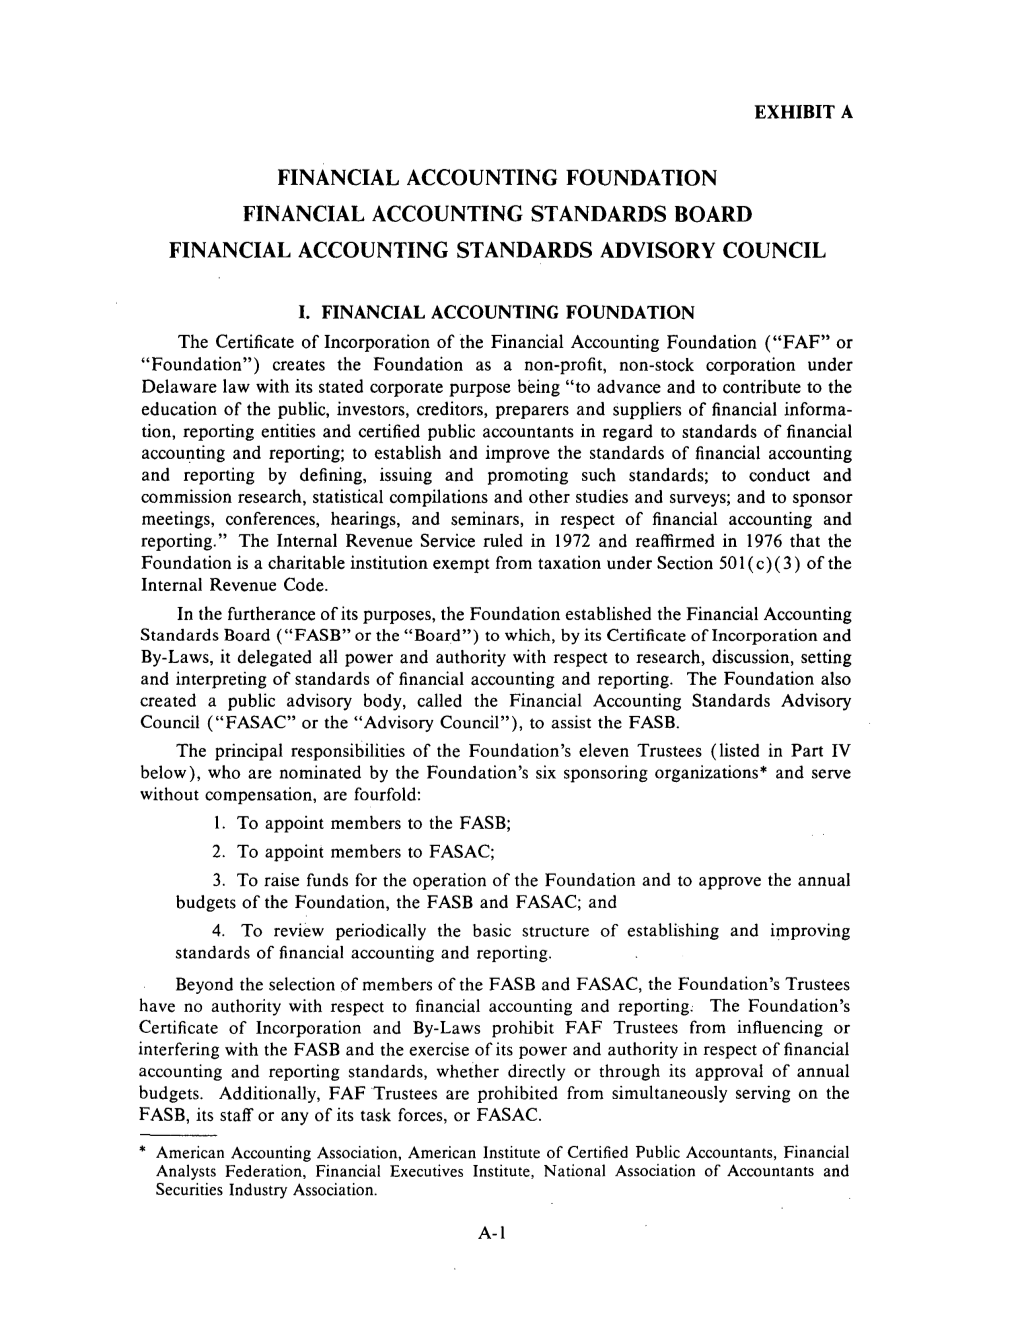 Financial Accounting Foundation Financial Accounting Standards Board Financial Accounting Standards Advisory Council